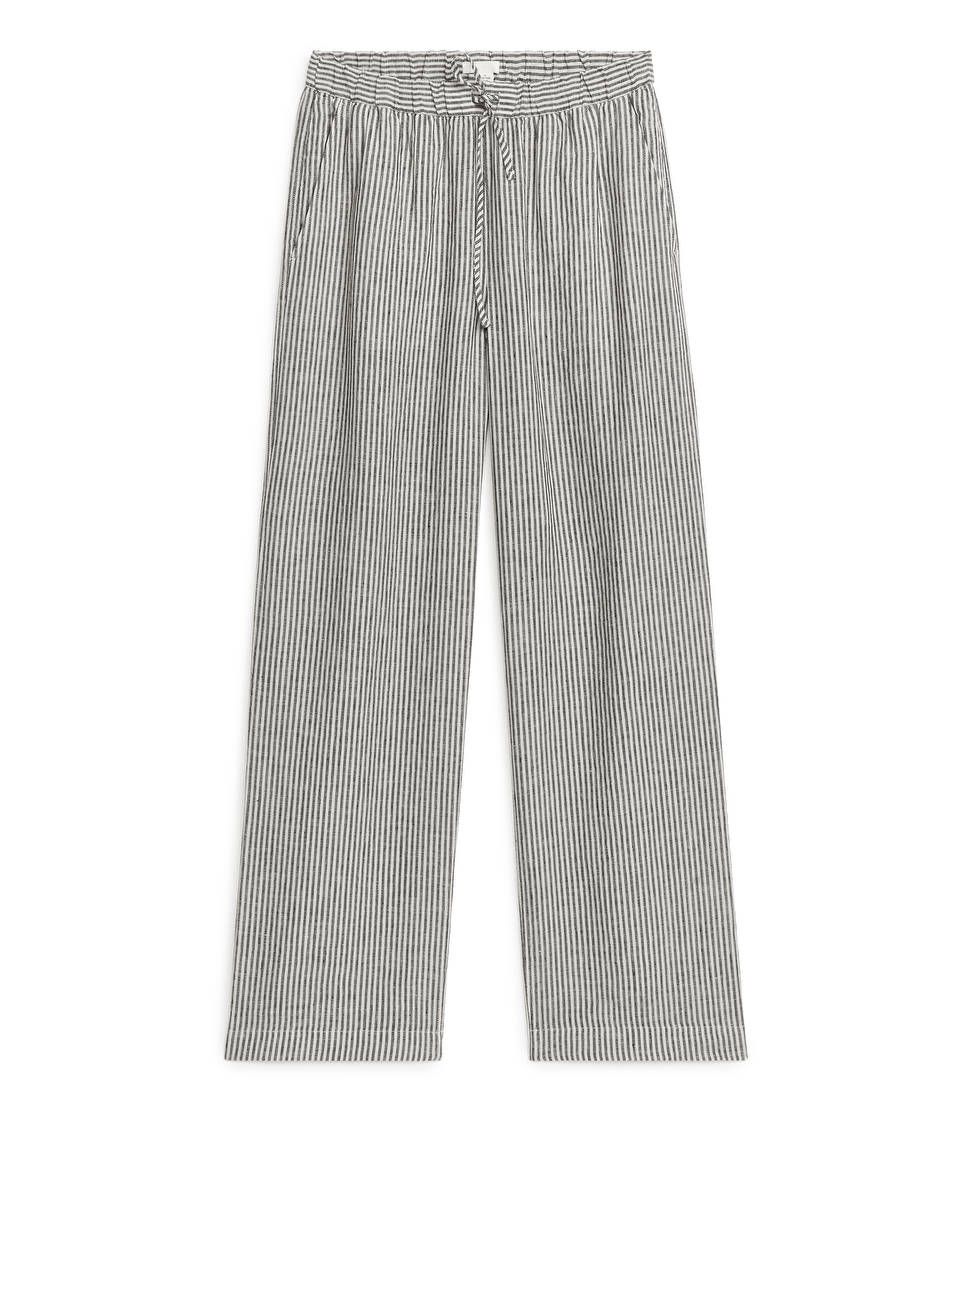 Linen Drawstring Trousers - Off White/Black - ARKET GB | ARKET (US&UK)